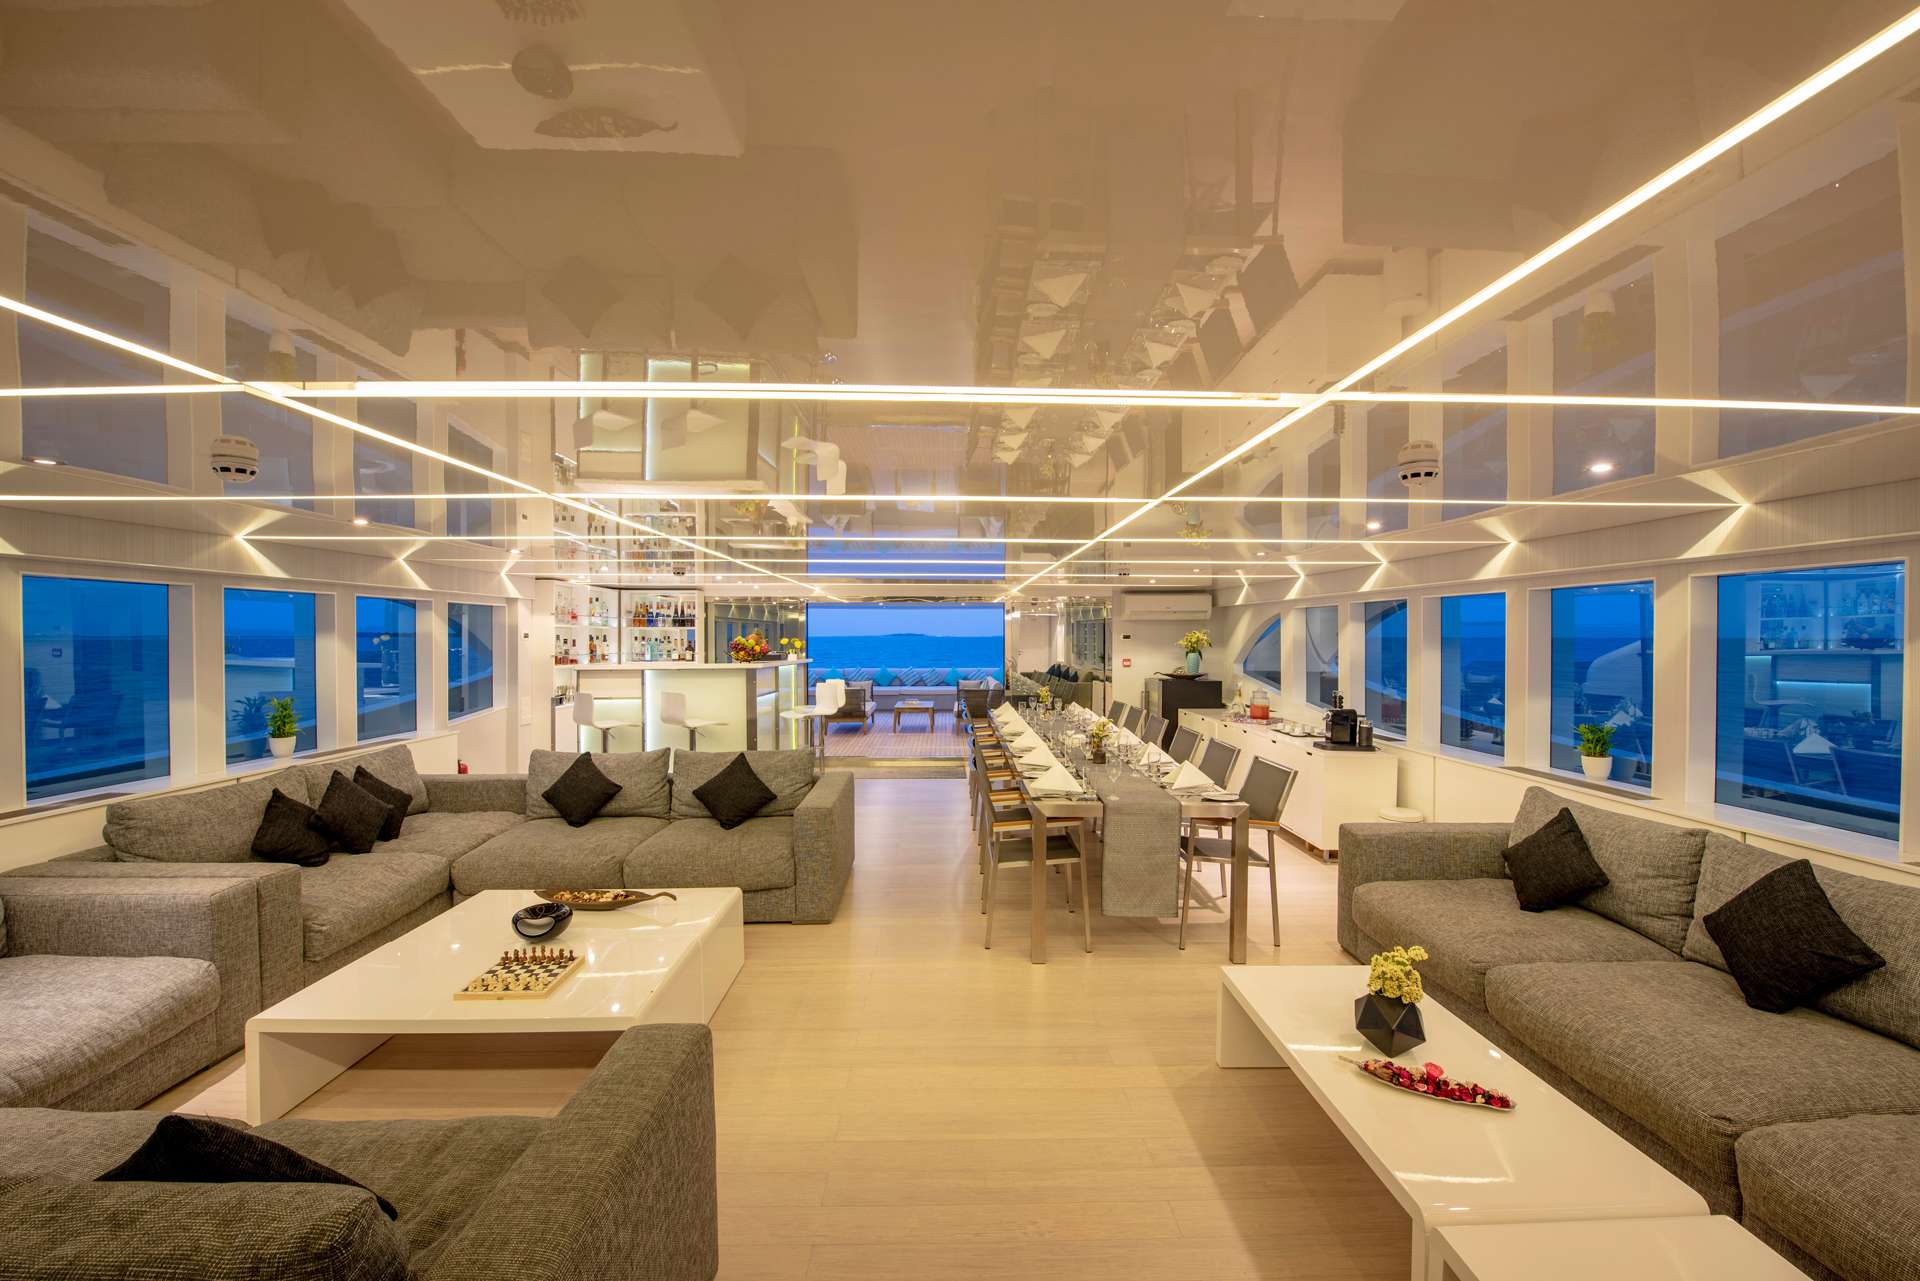 searex - Yacht Charter Eden Island & Boat hire in Indian Ocean & SE Asia 2